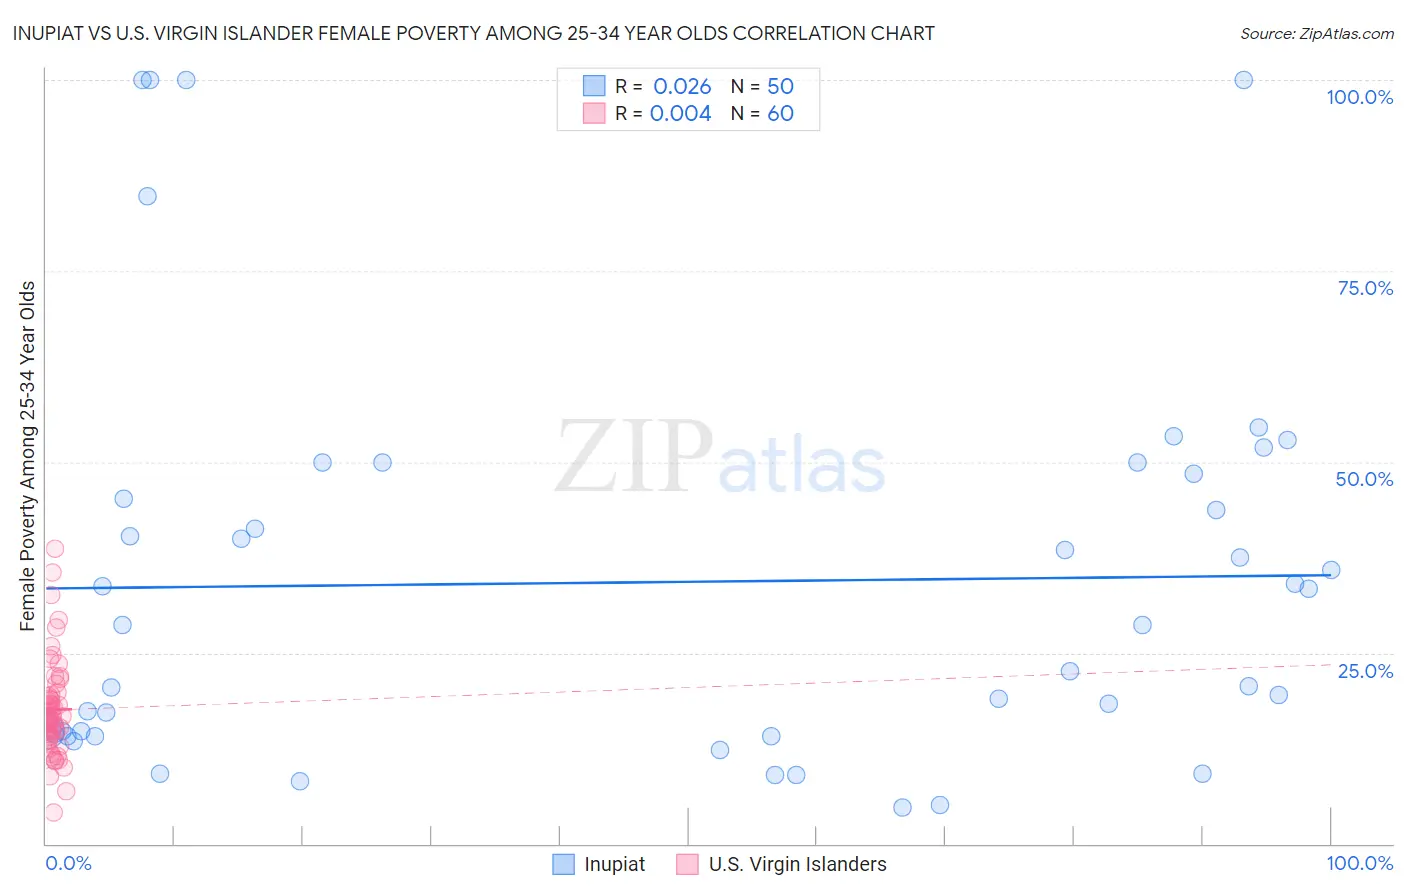 Inupiat vs U.S. Virgin Islander Female Poverty Among 25-34 Year Olds